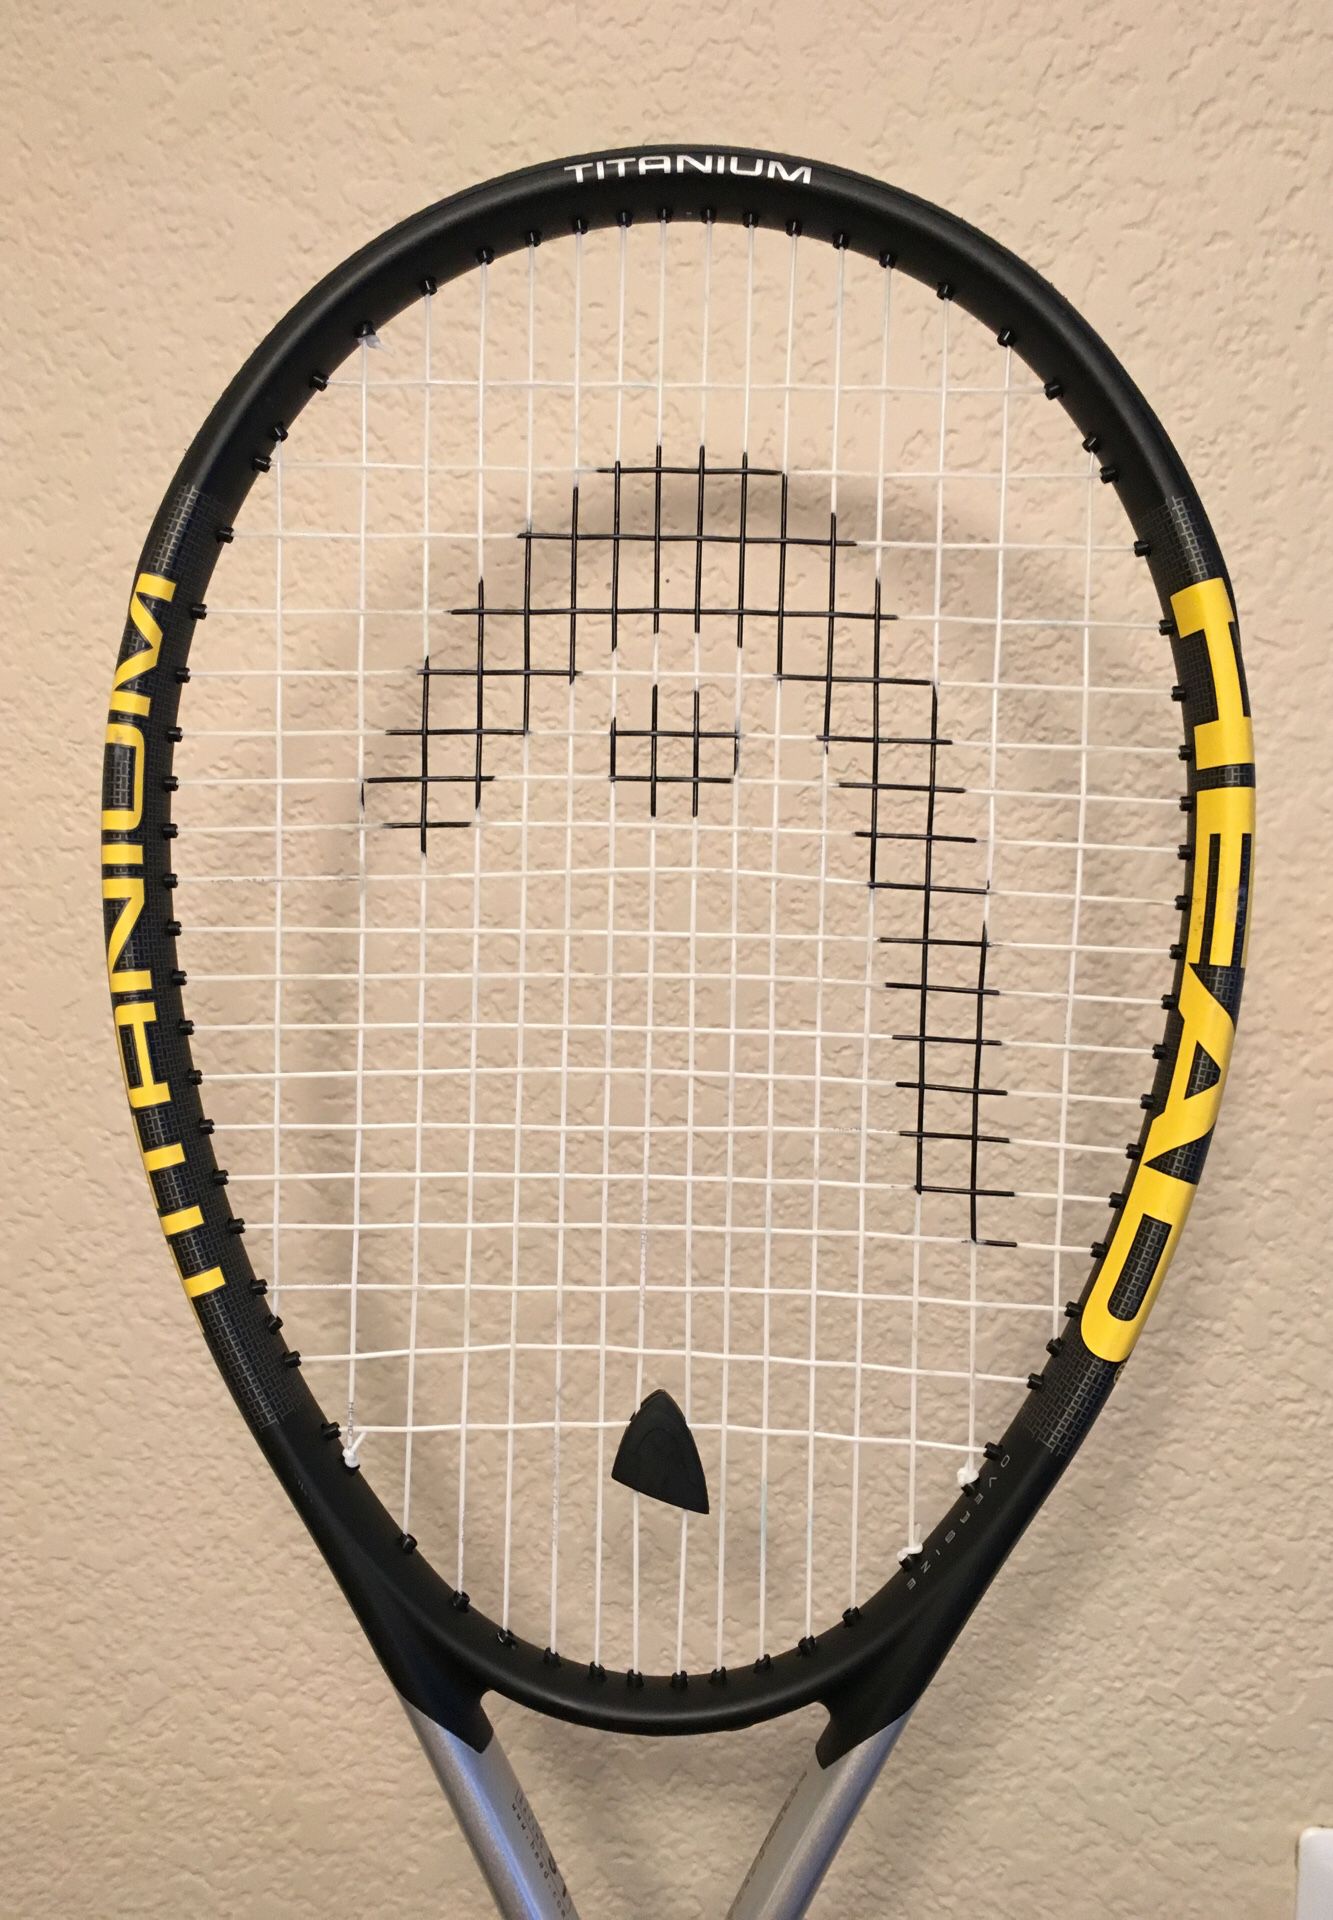 Head Tennis Racket - Titanium S1 with cover